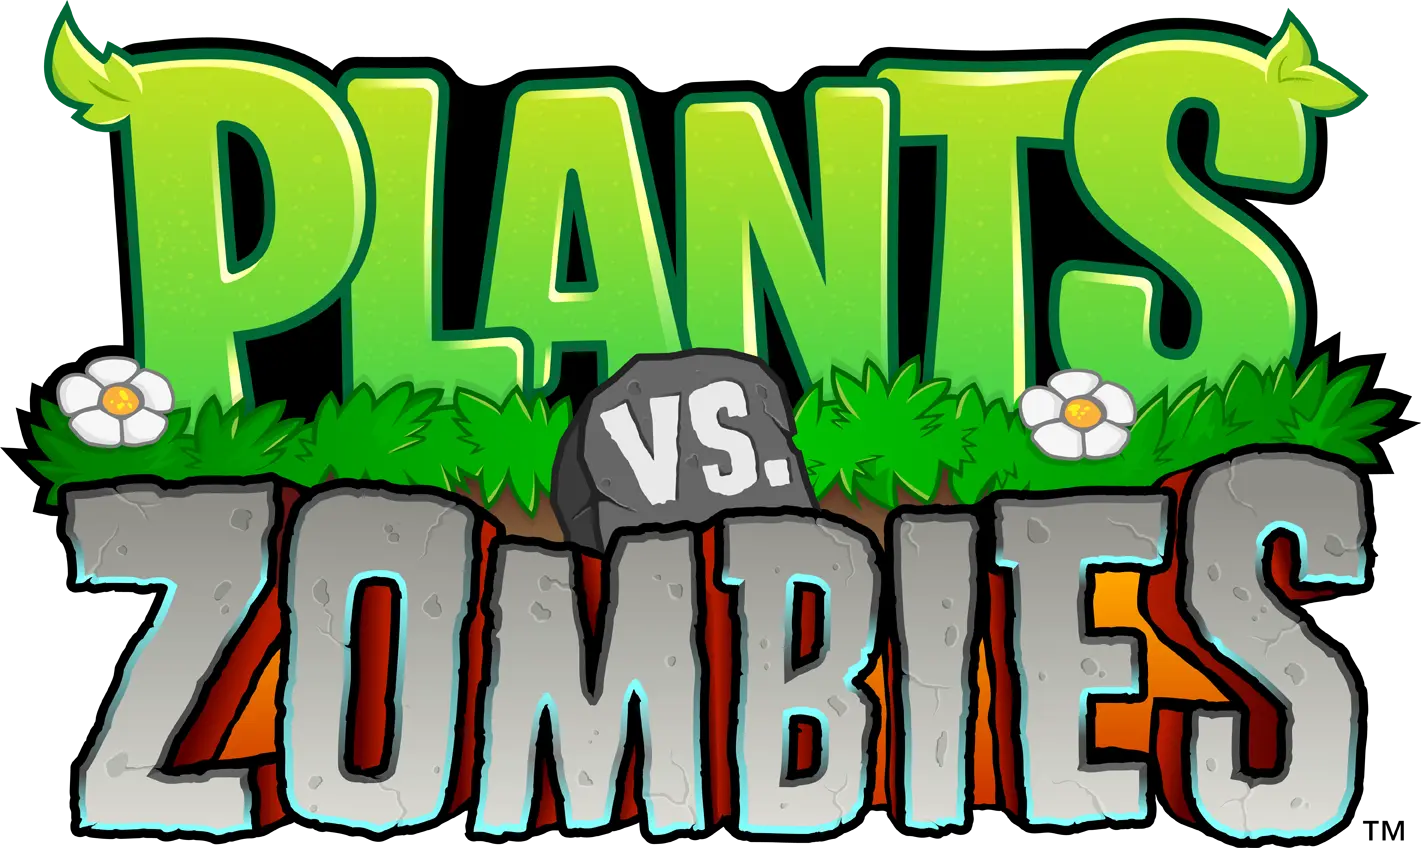 Ein neues Plants vs Zombies Spiel kommt